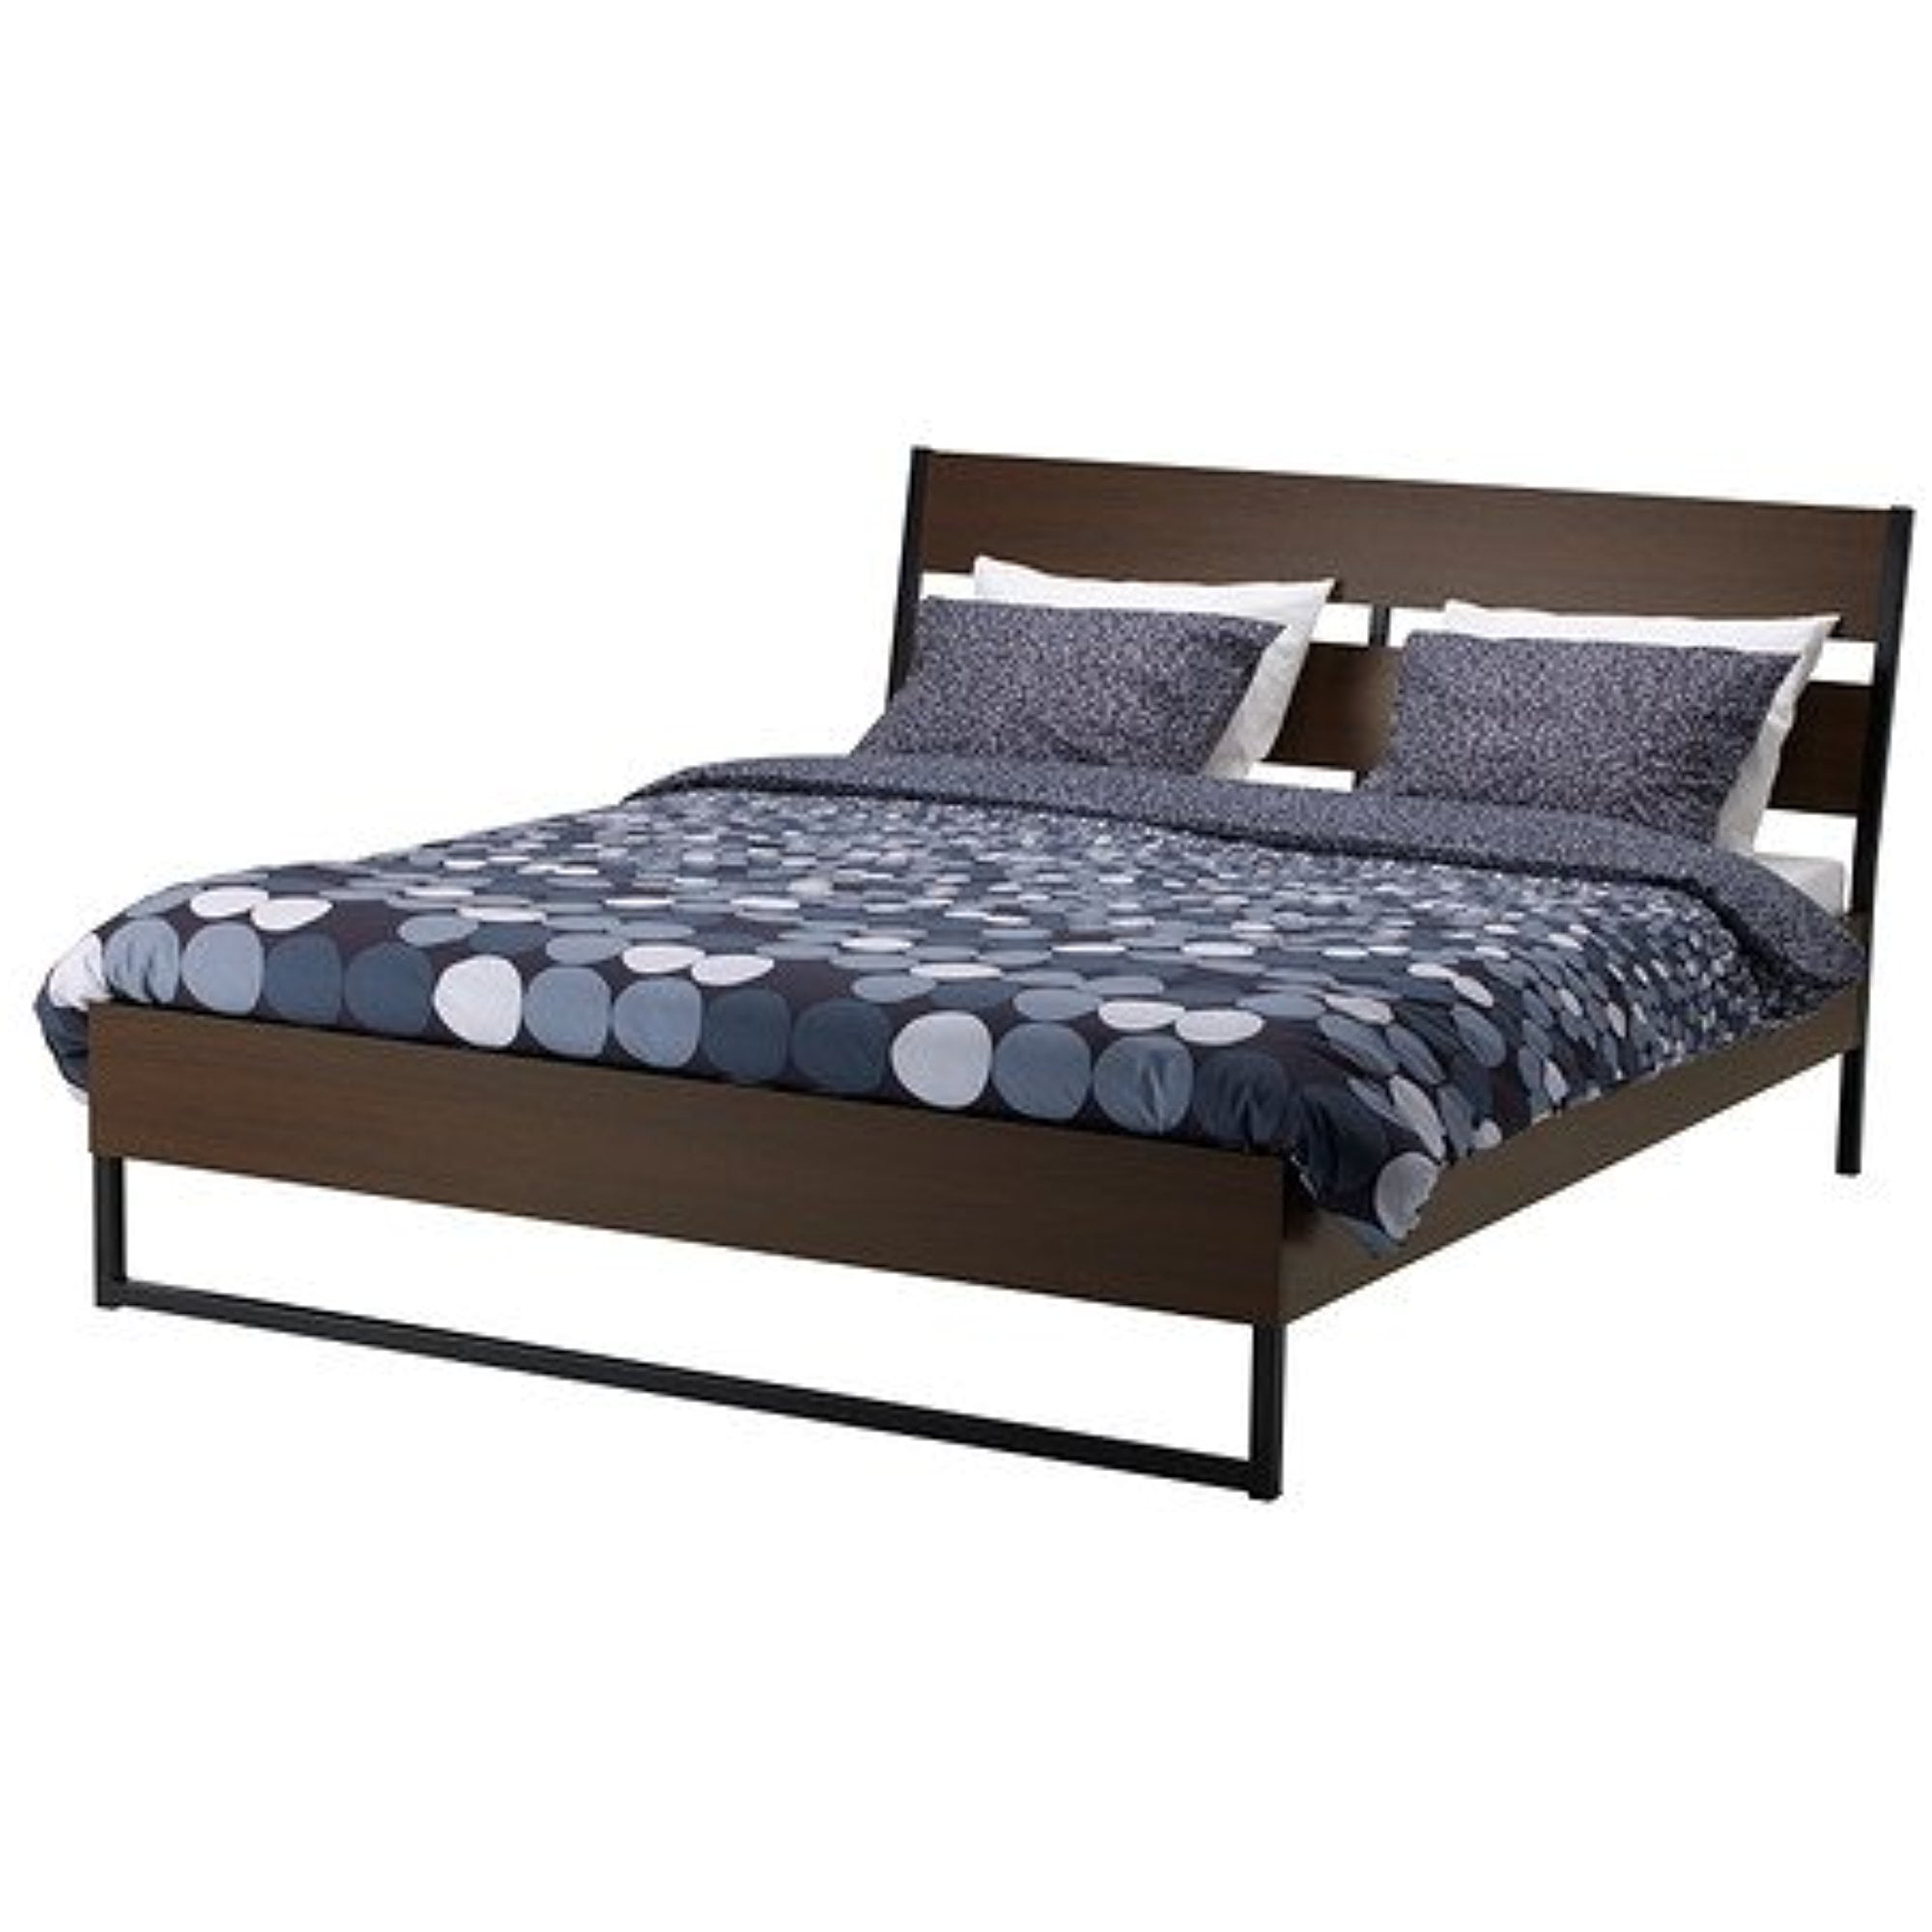 Ikea Full Size Bed frame, dark brown, Luröy , 26382.202923.2020